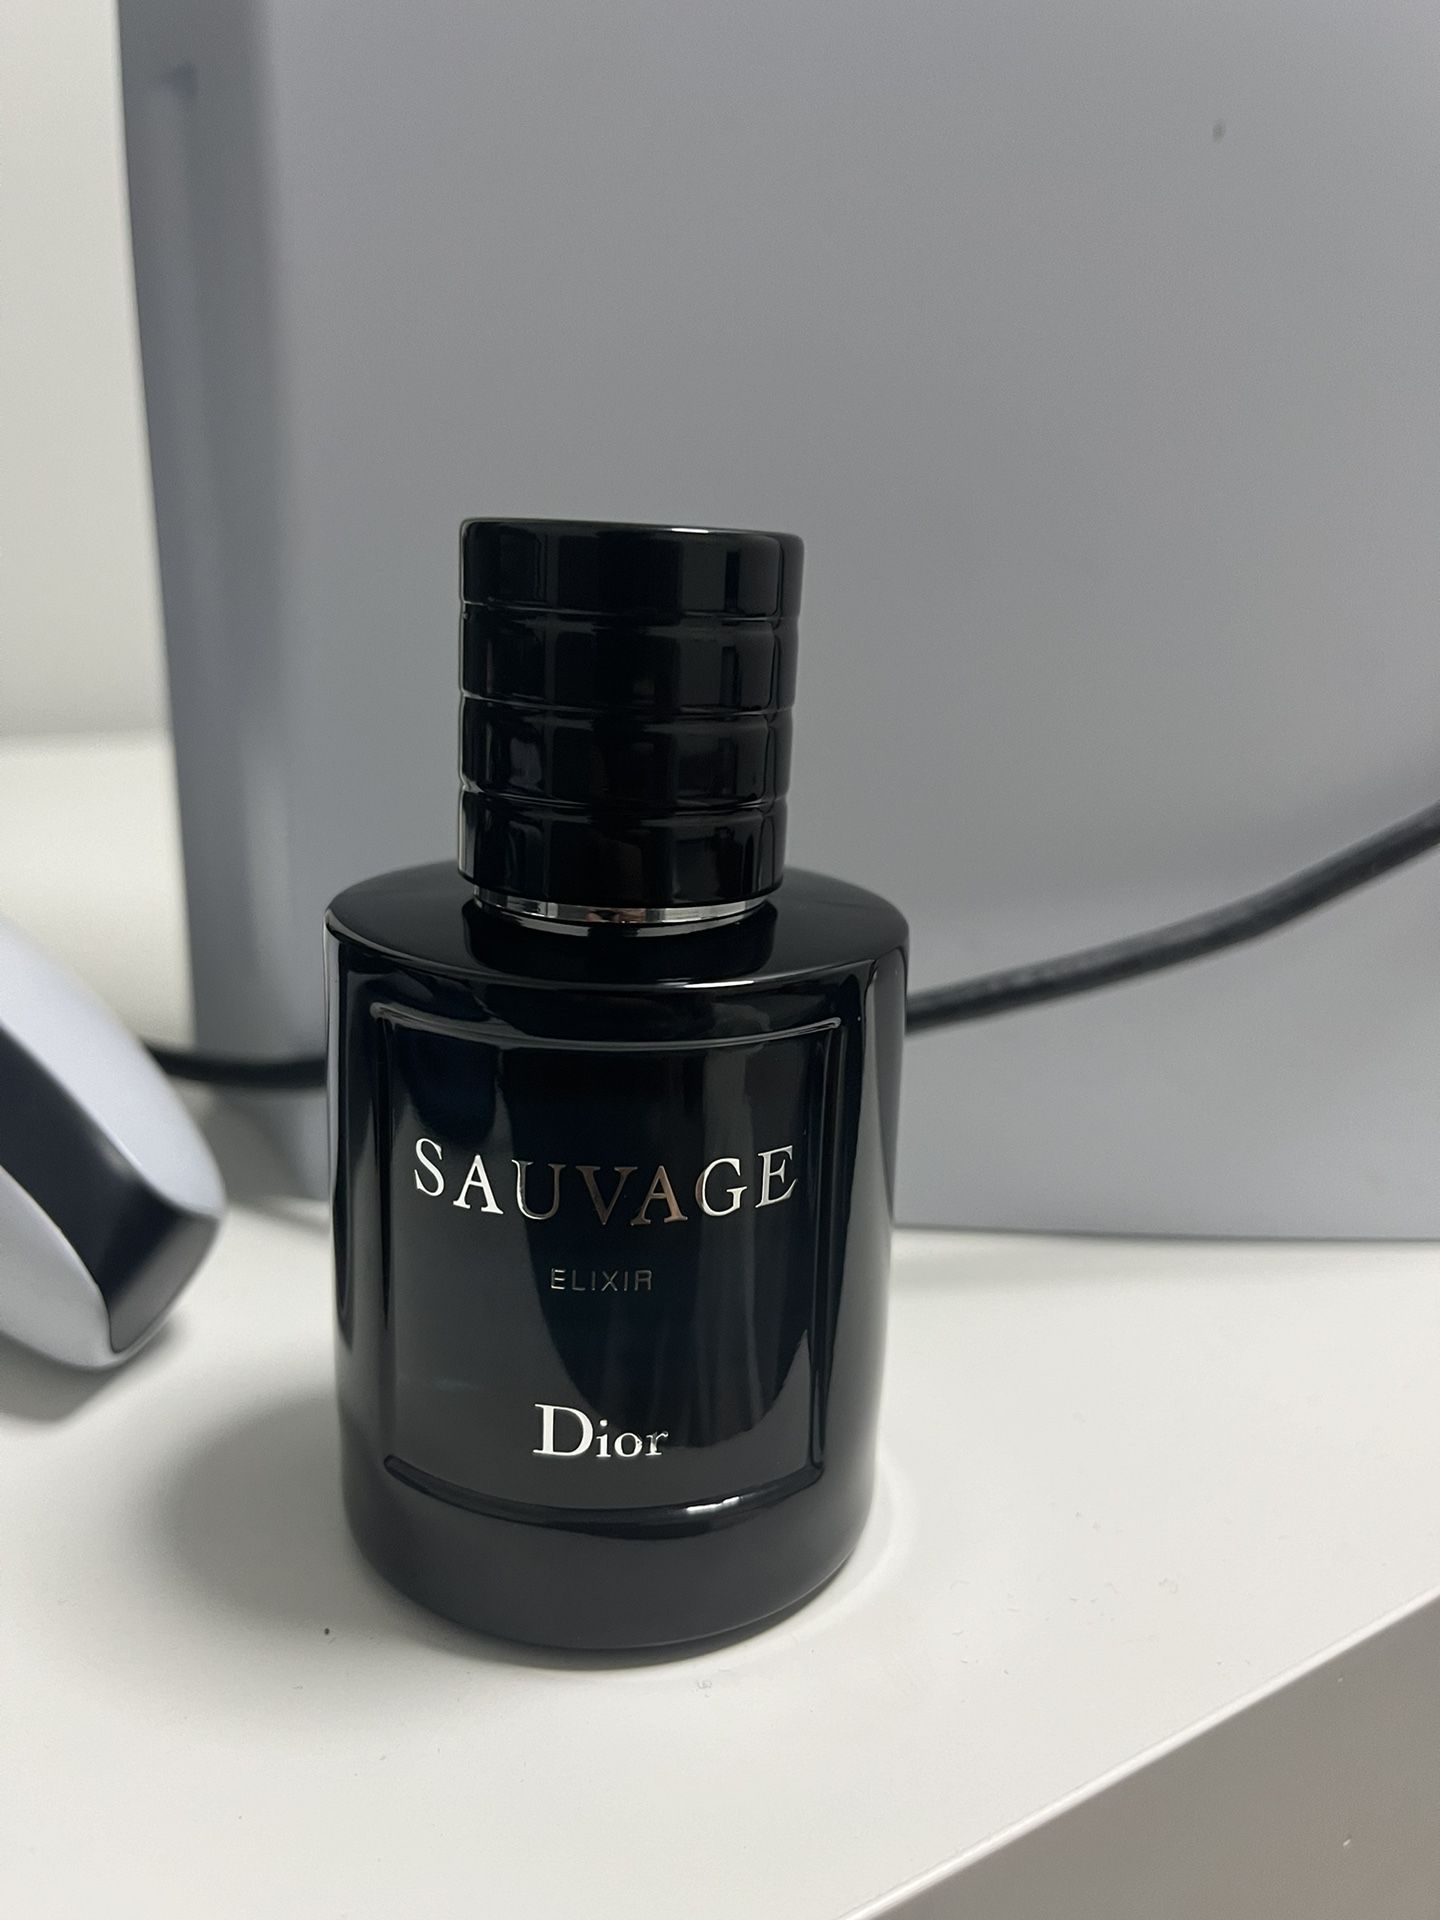 Dior Sauvage Elixir Cologne/fragrance Full Bottle